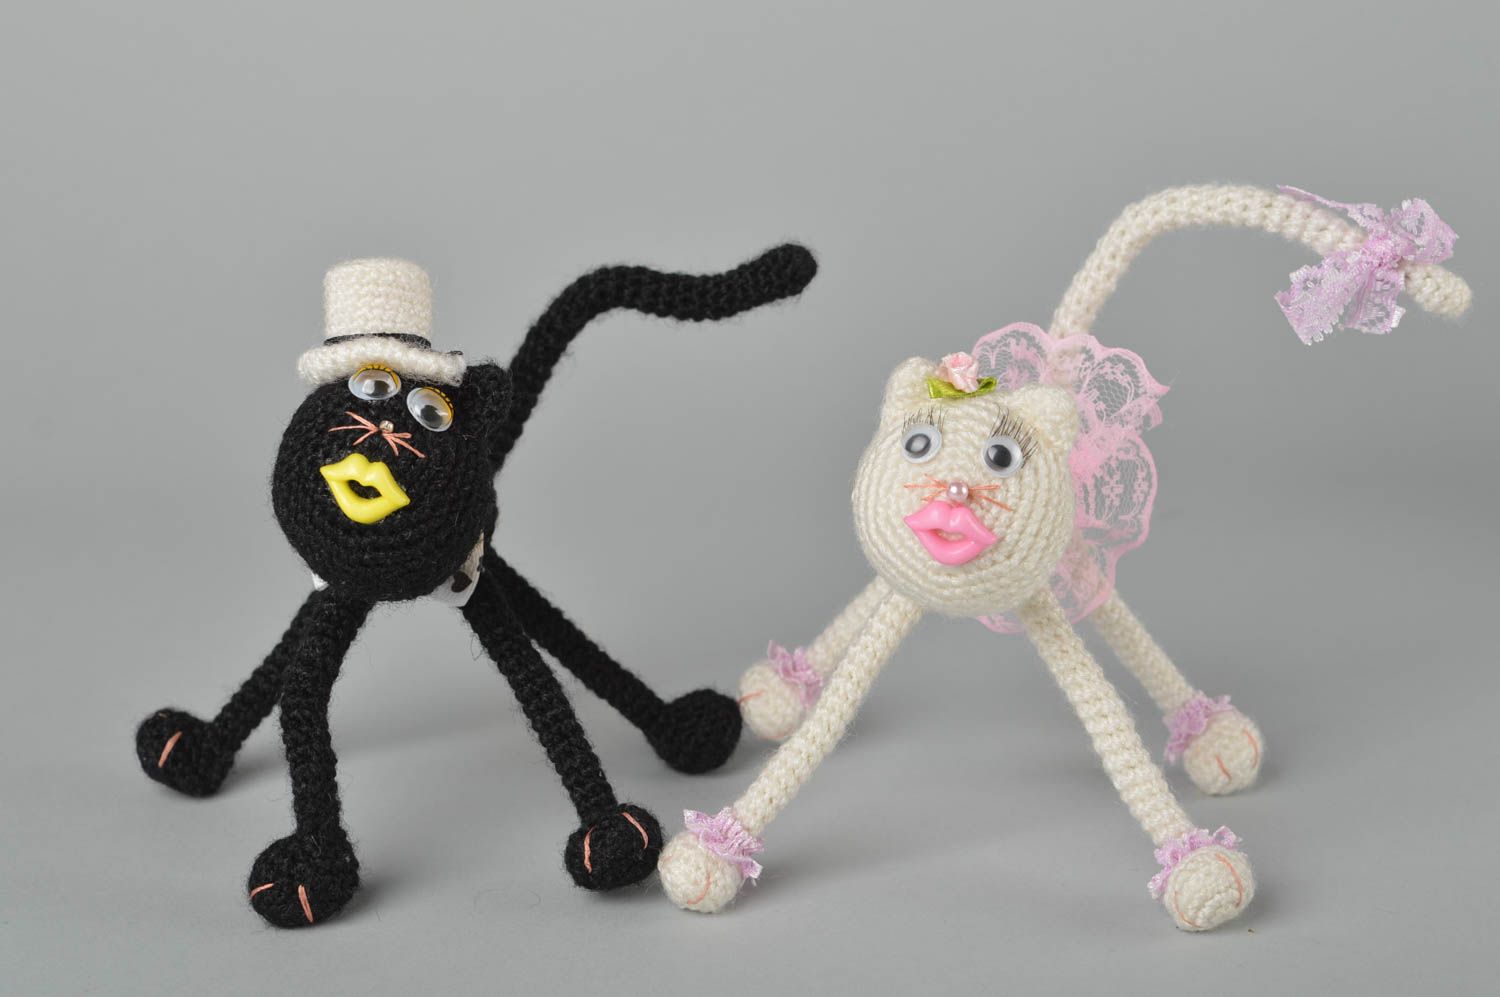 Handmade crocheted toys creative toys for children trendy toys nursery decor photo 2